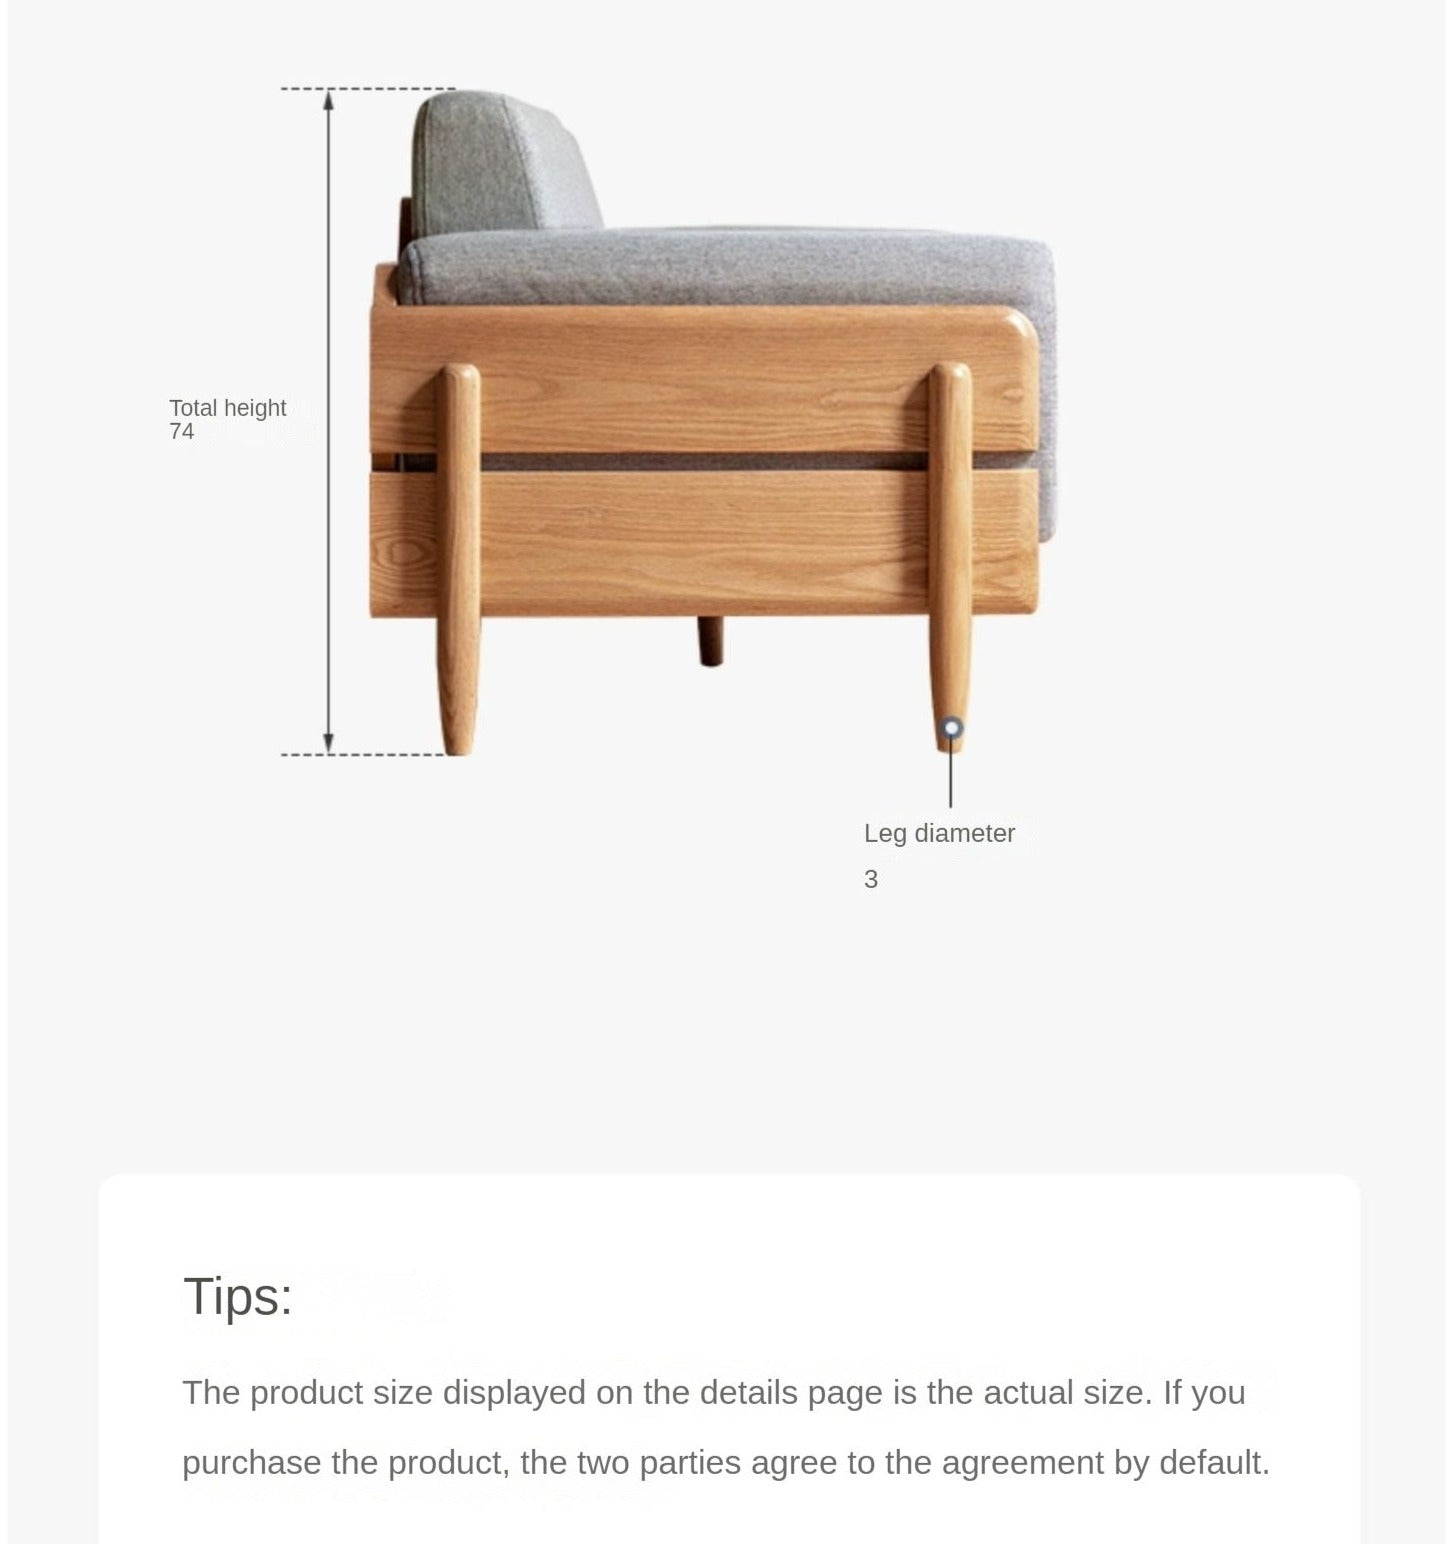 Ash Solid Wood Fabric Sofa)